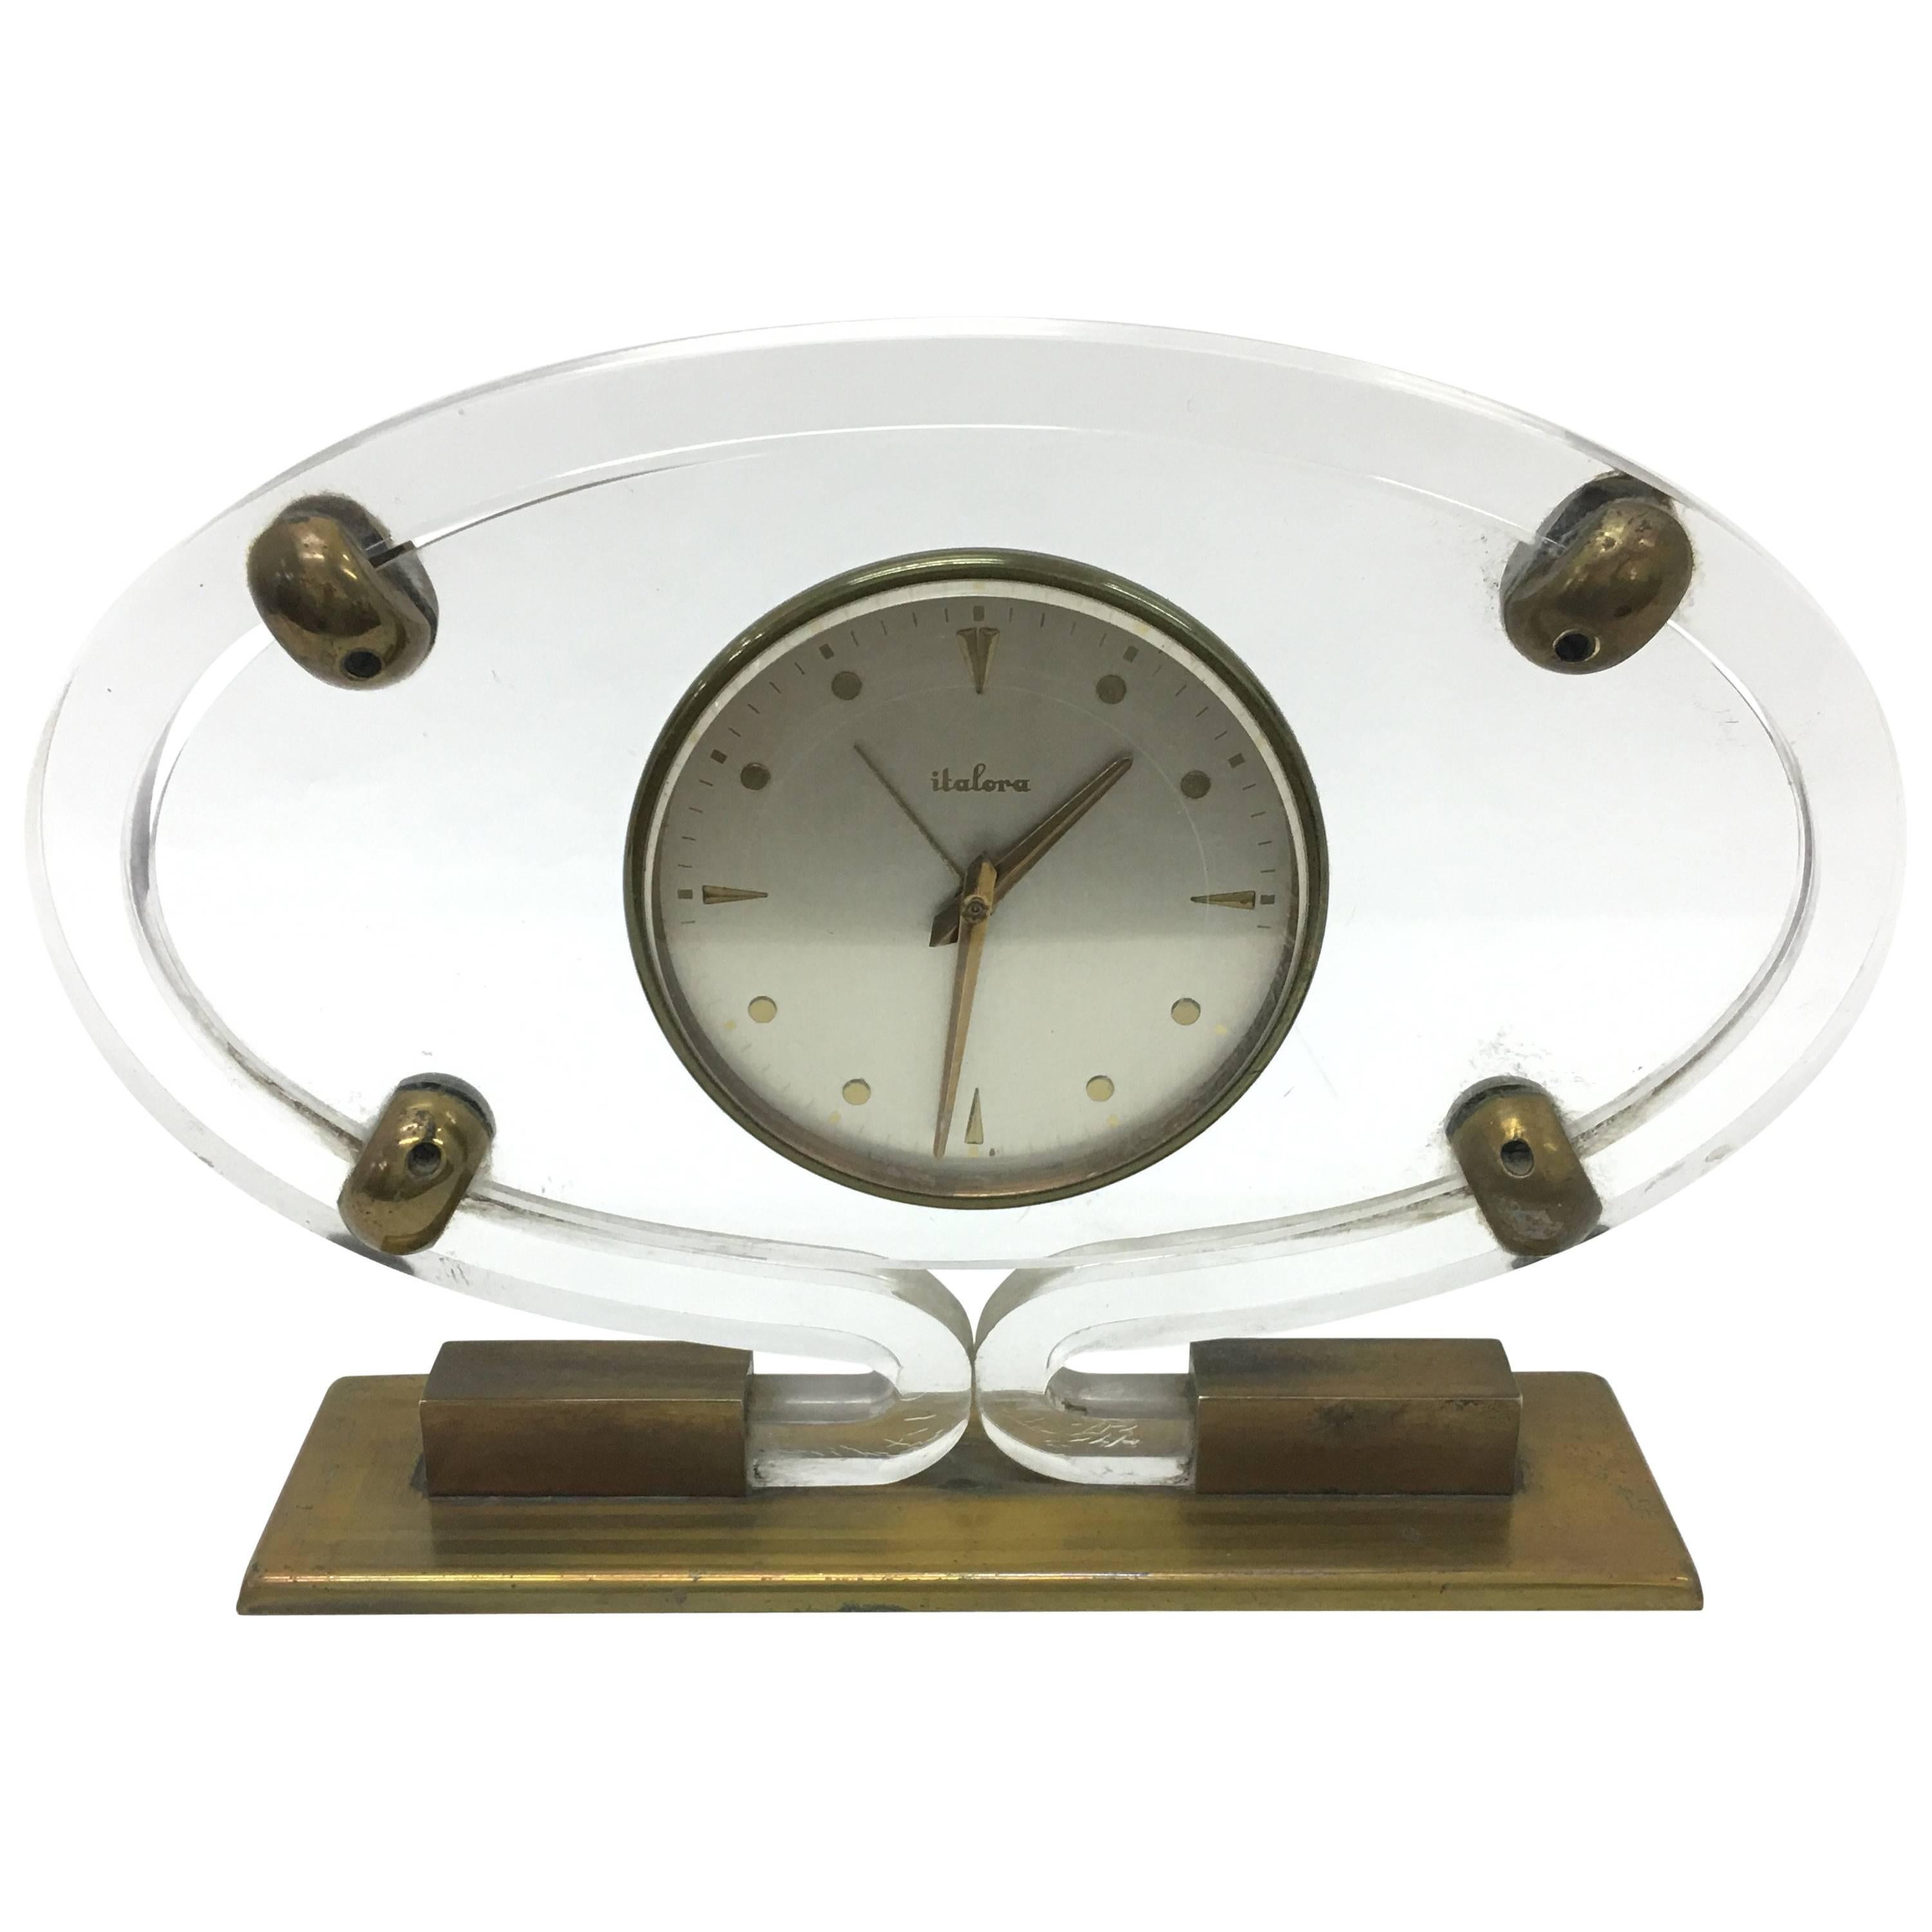 Mid-Century Modern Italian Plexiglass and brass Table Clock by Italora 1950